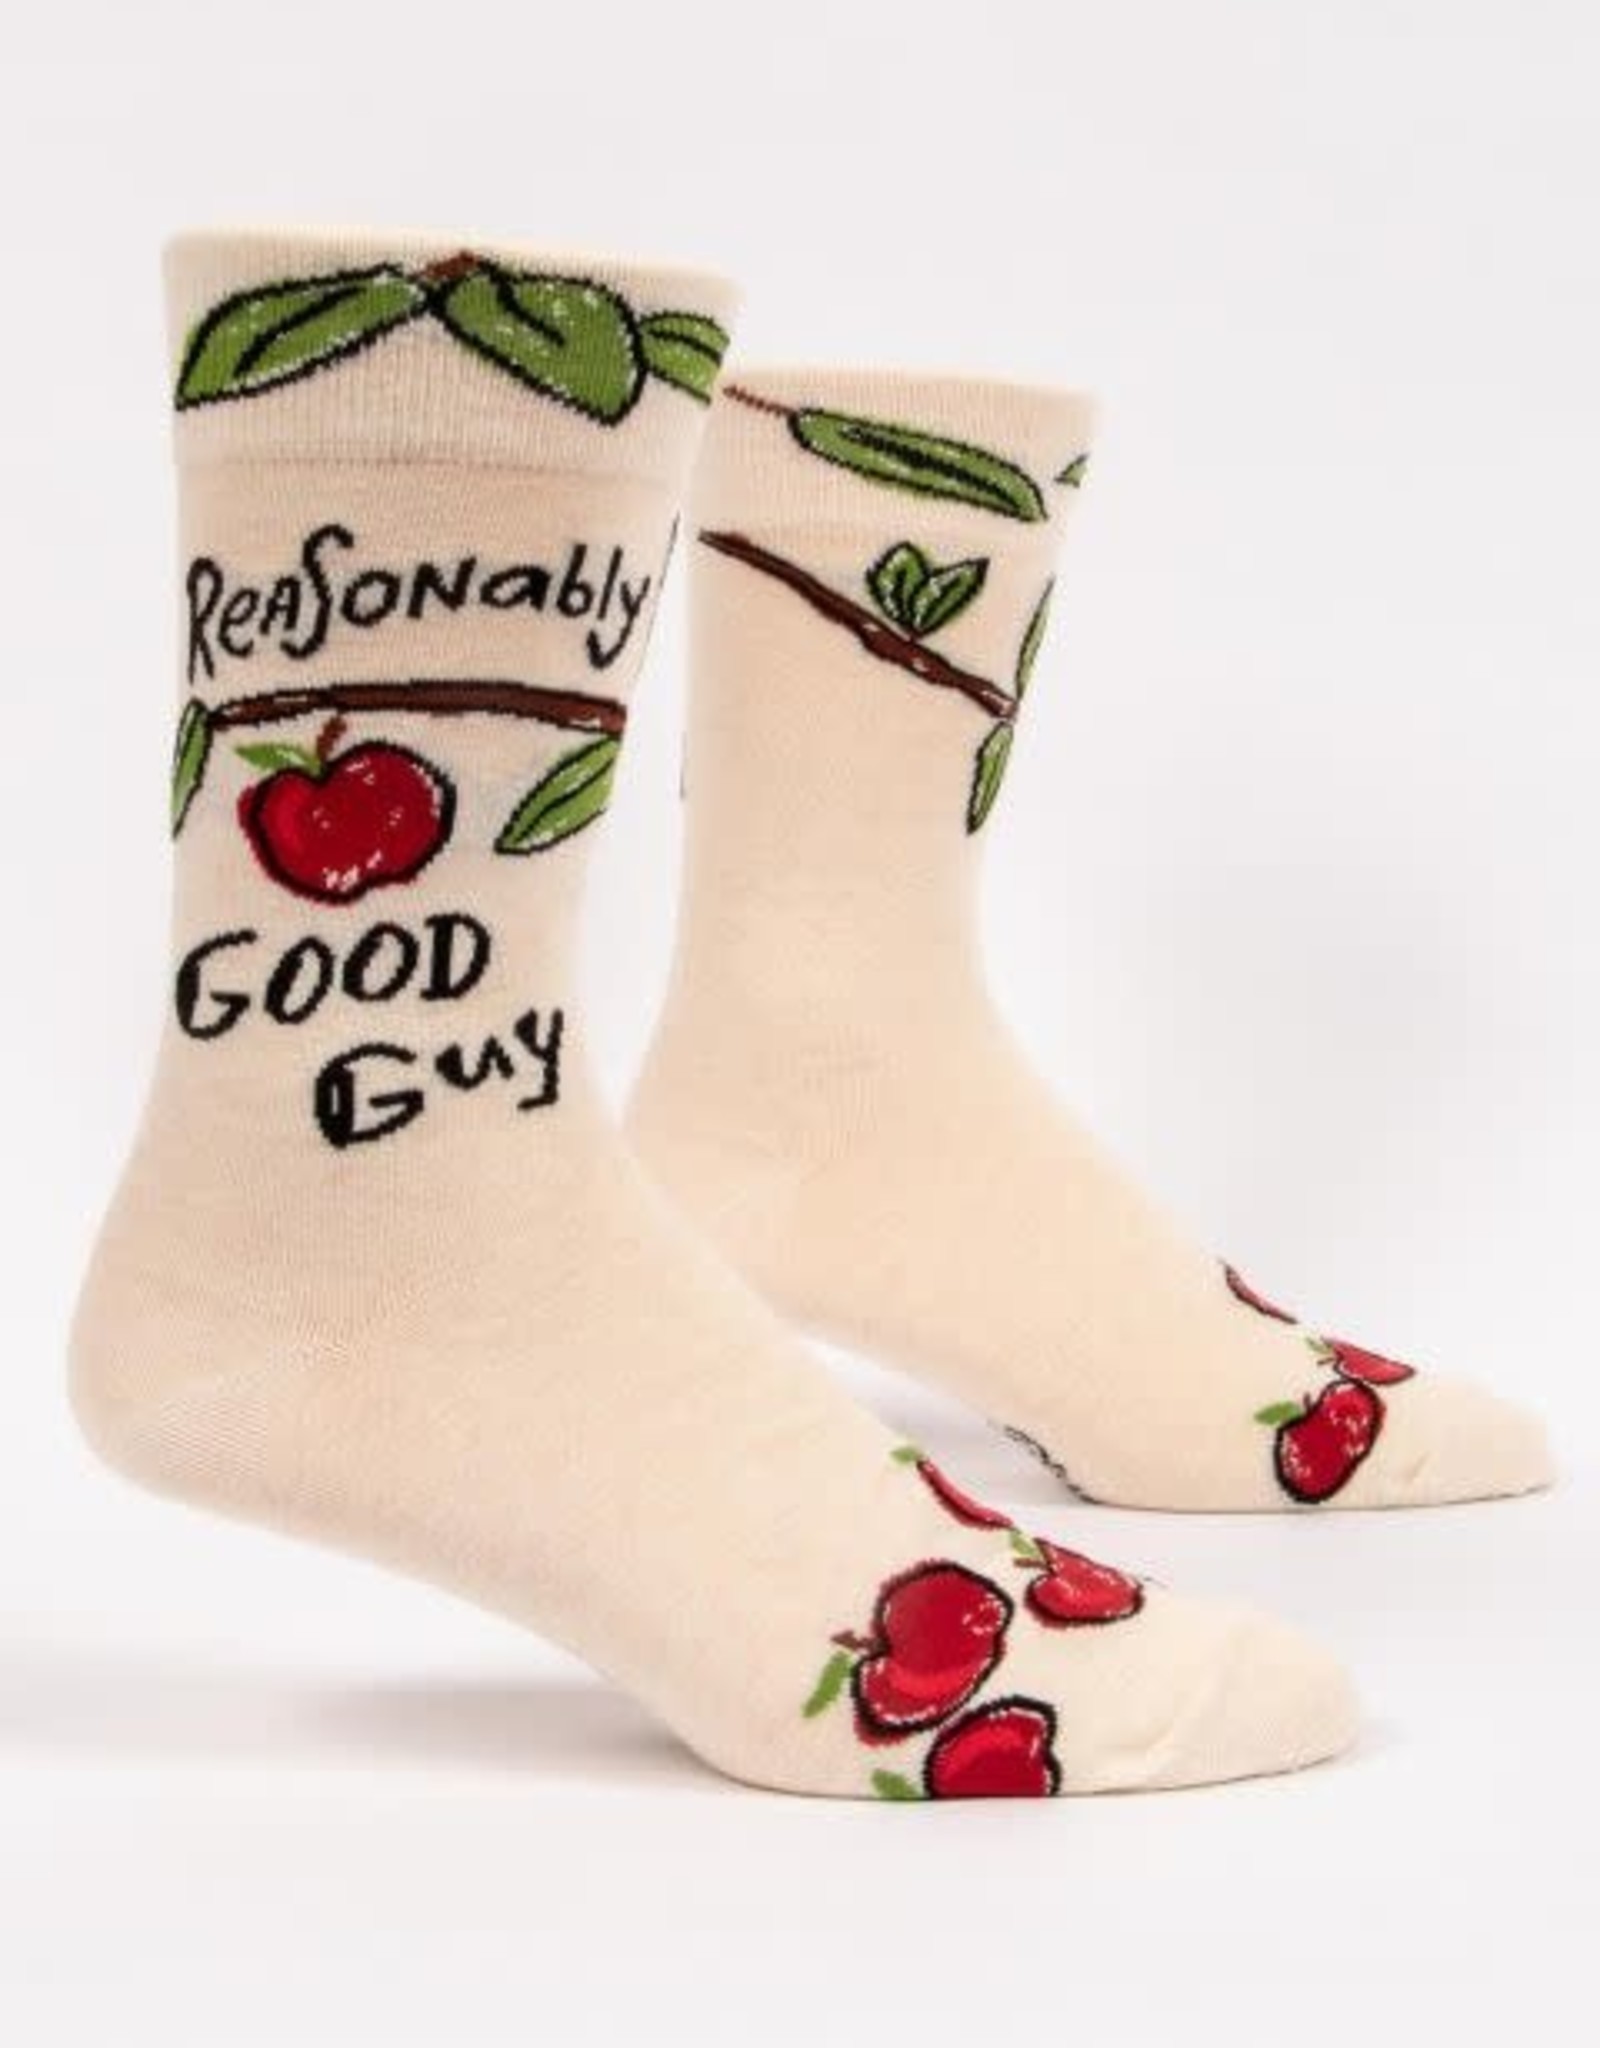 Reasonably Good Guy Men's Socks